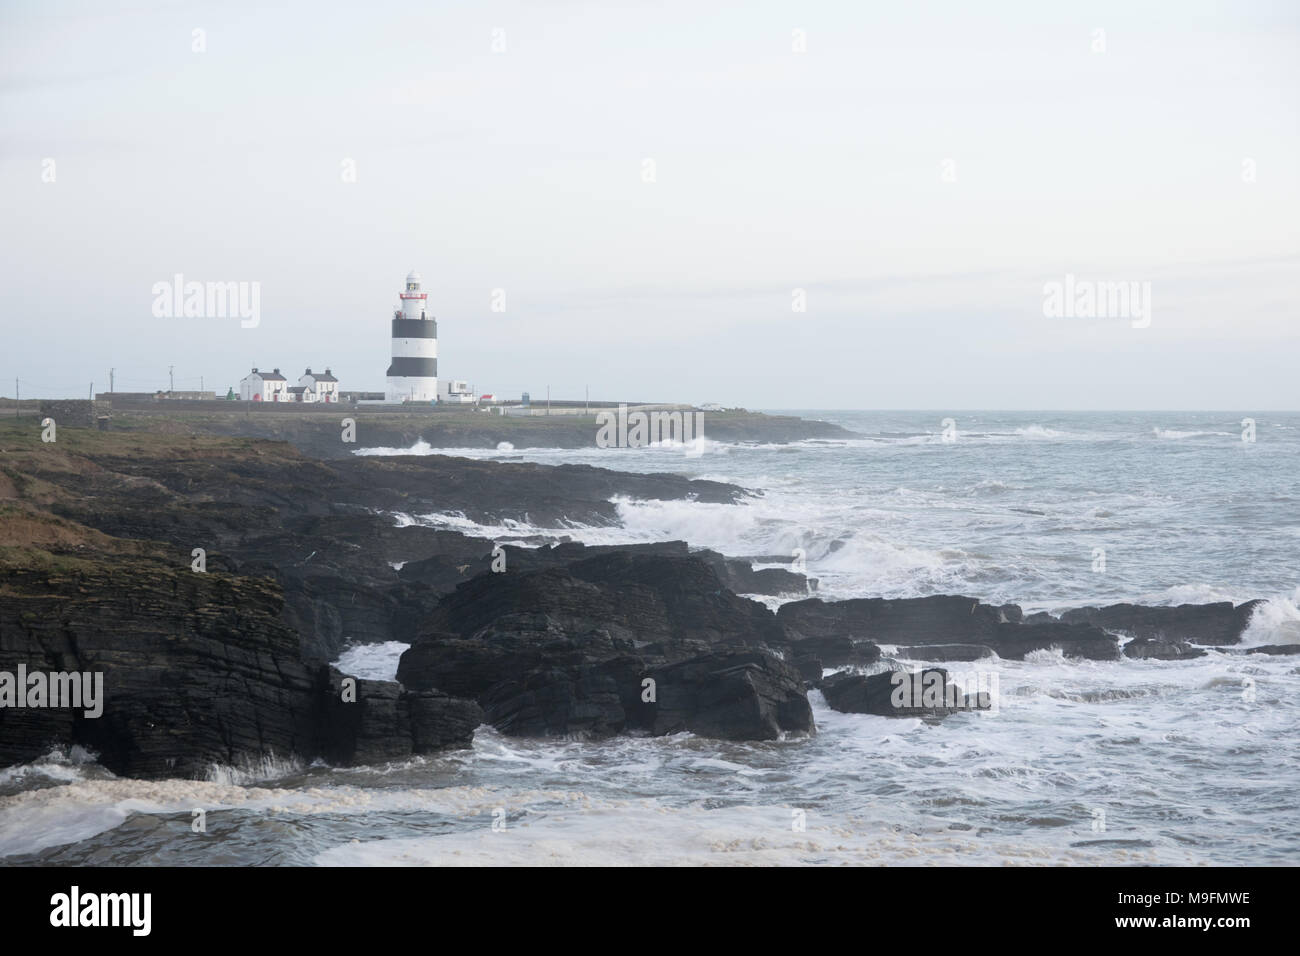 Irish light house on a rocky coastline with waves crashing up ion the shore. Stock Photo